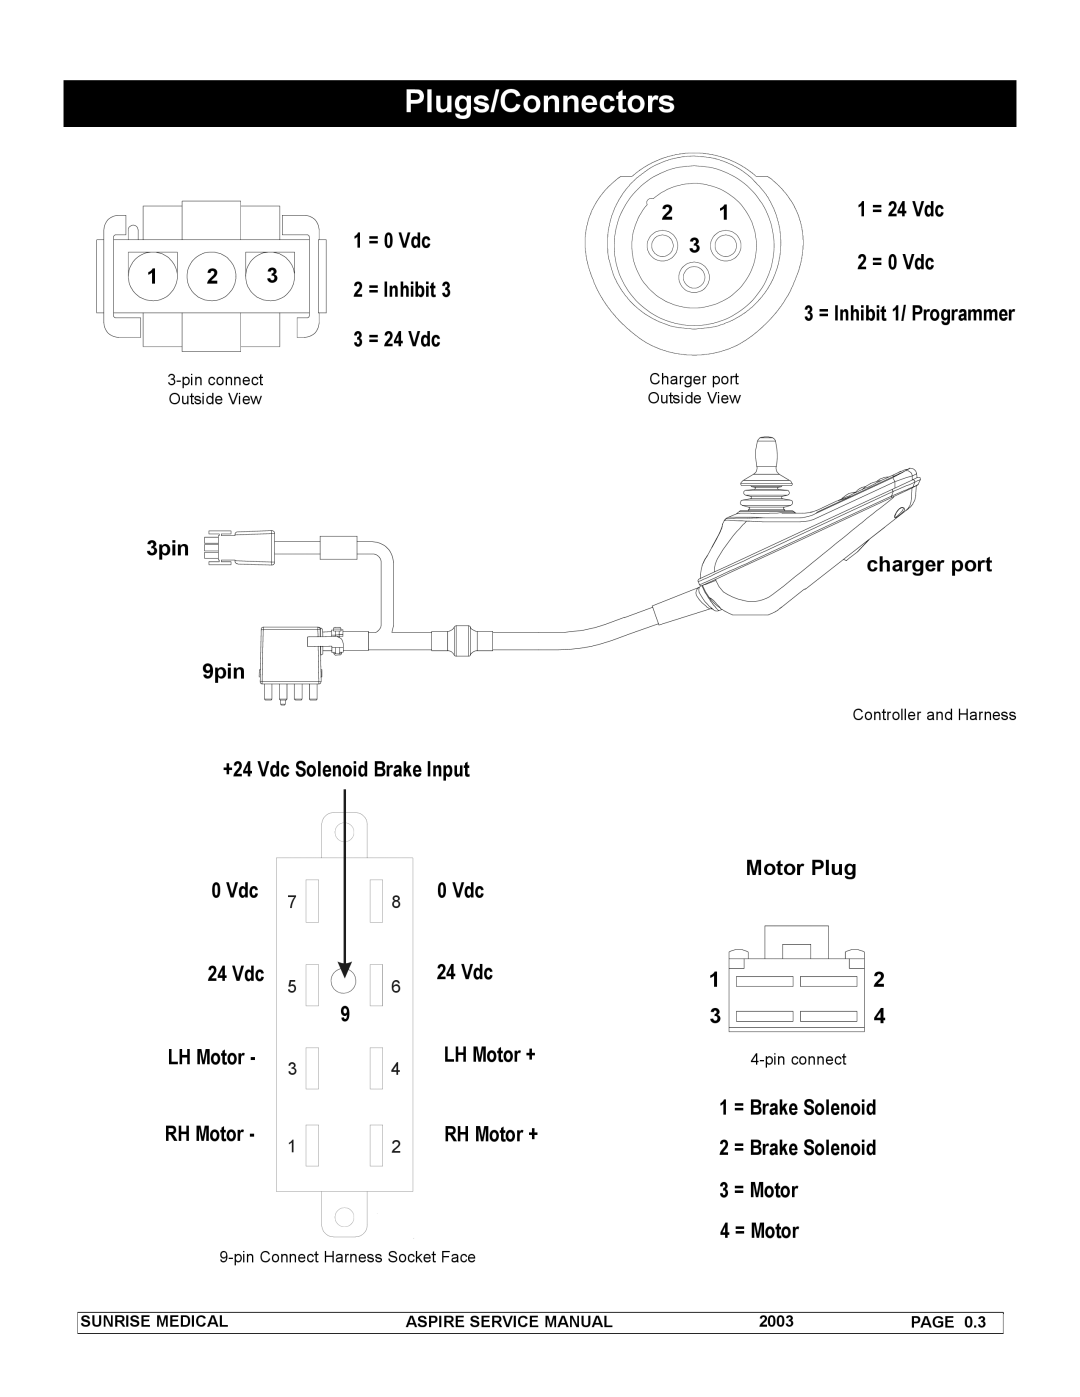 Sunrise Medical 931157 service manual Plugs/Connectors, 0 Vdc, 24 Vdc, LH Motor, RH Motor 